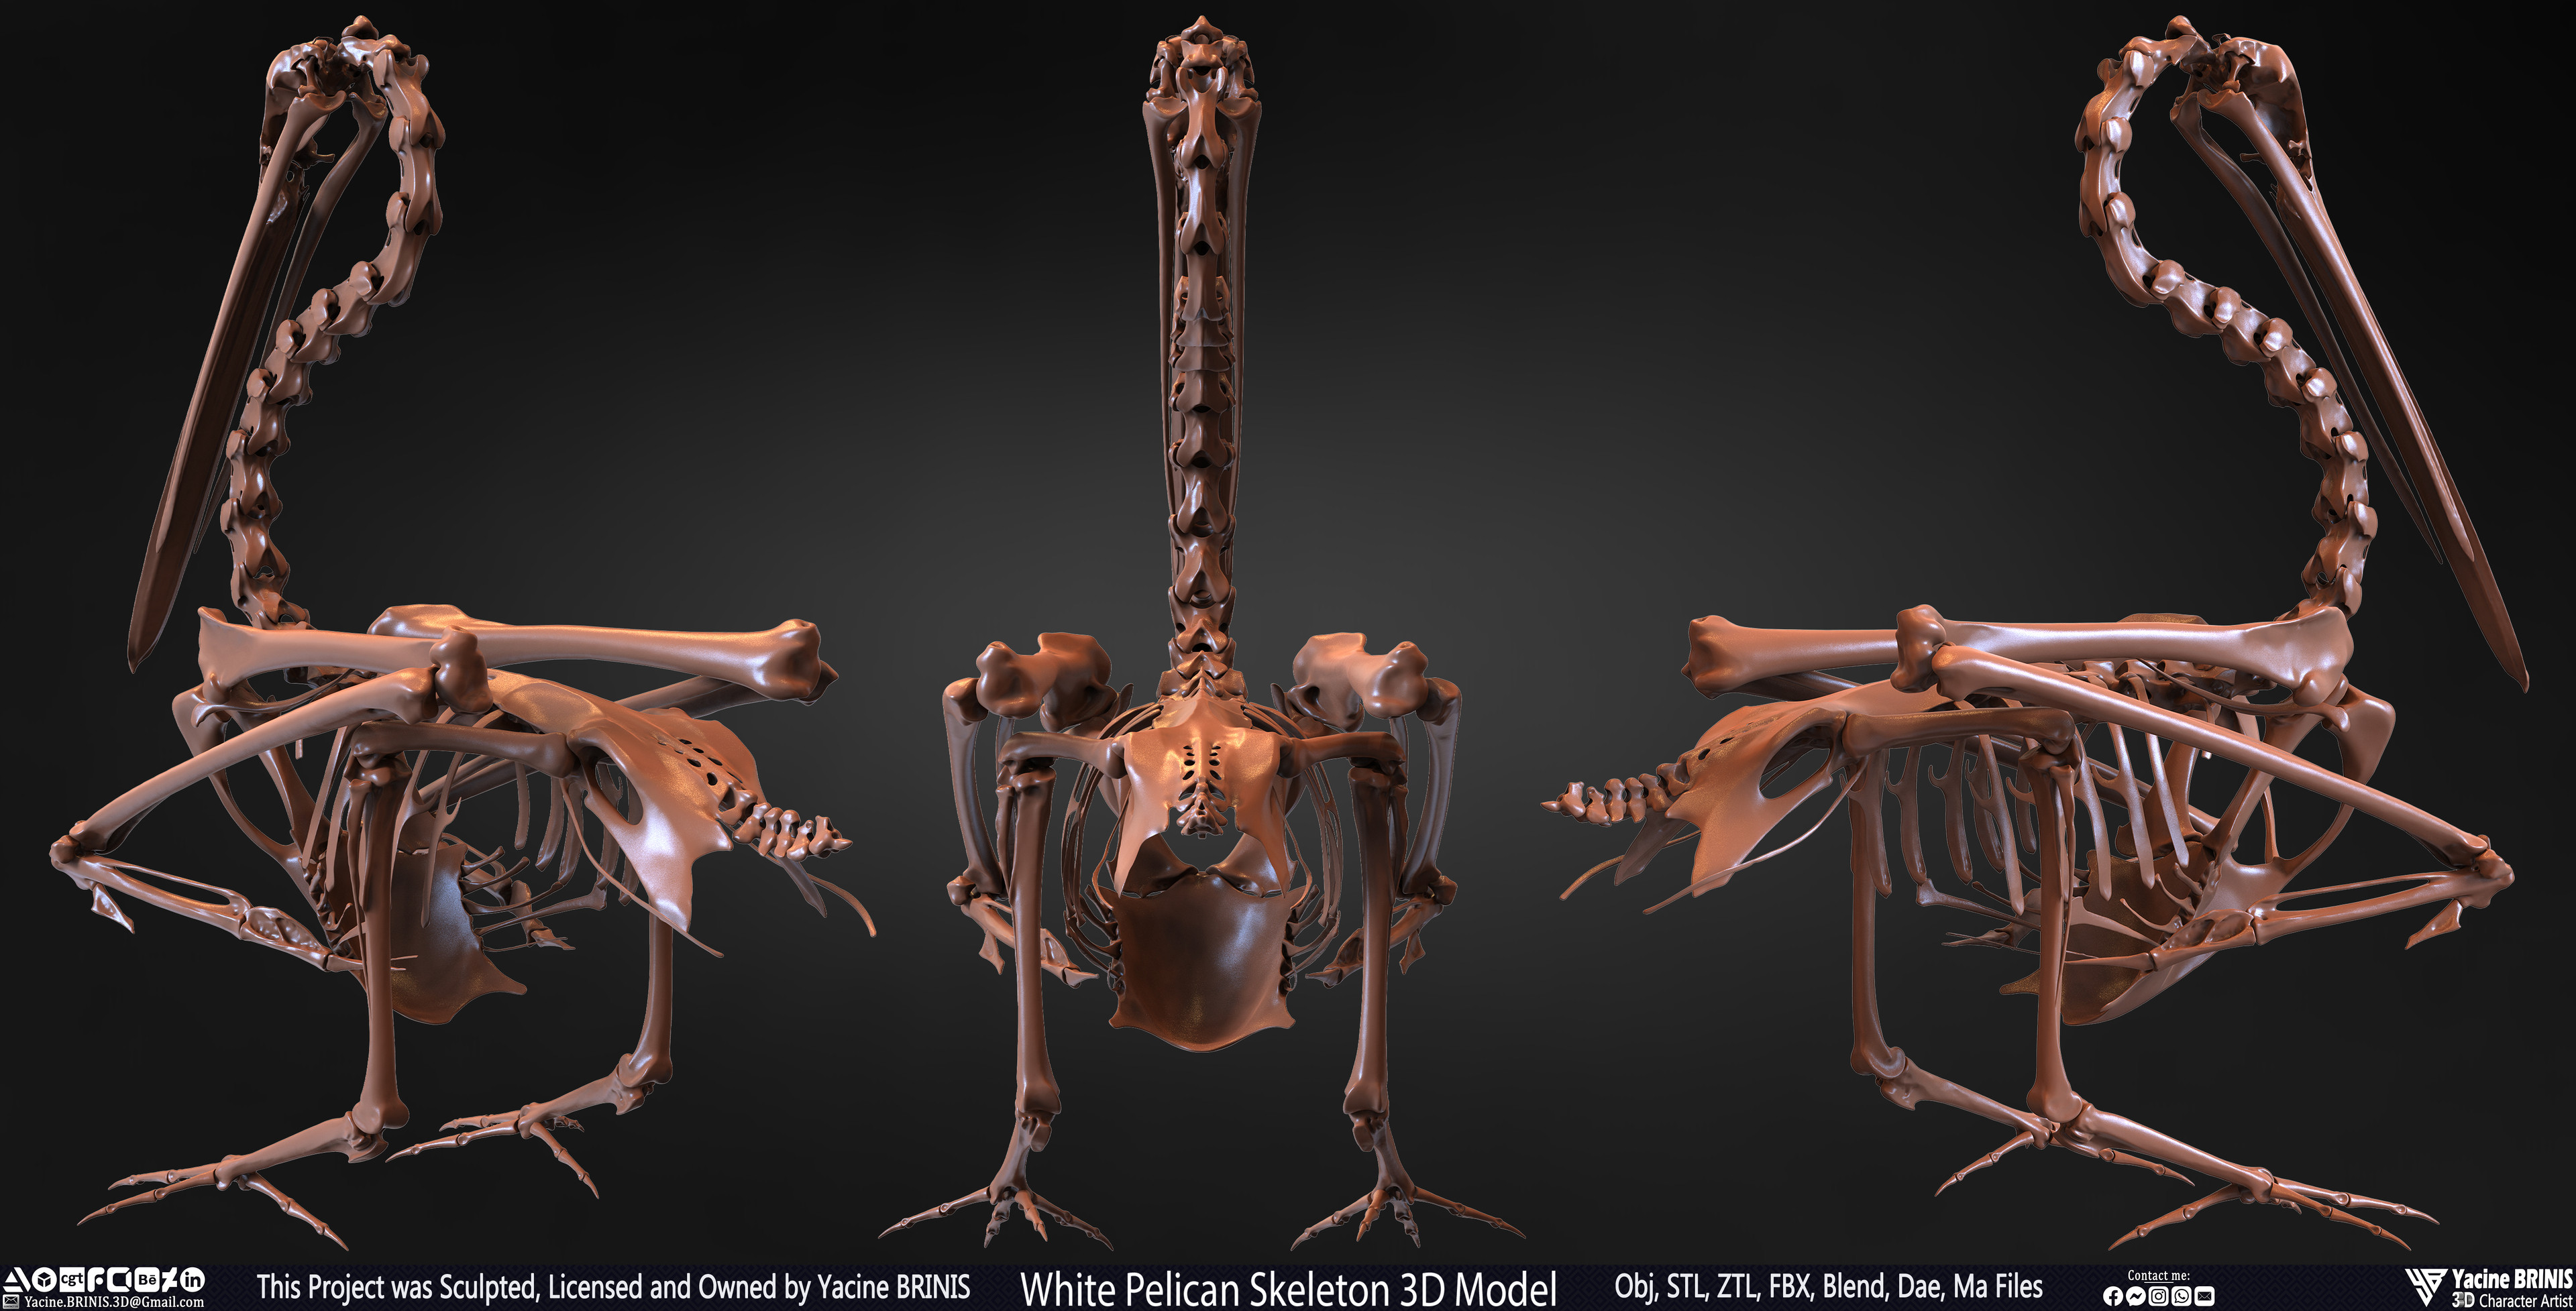 White Pelican Skeleton 3D Model Sculpted by Yacine BRINIS Set 002